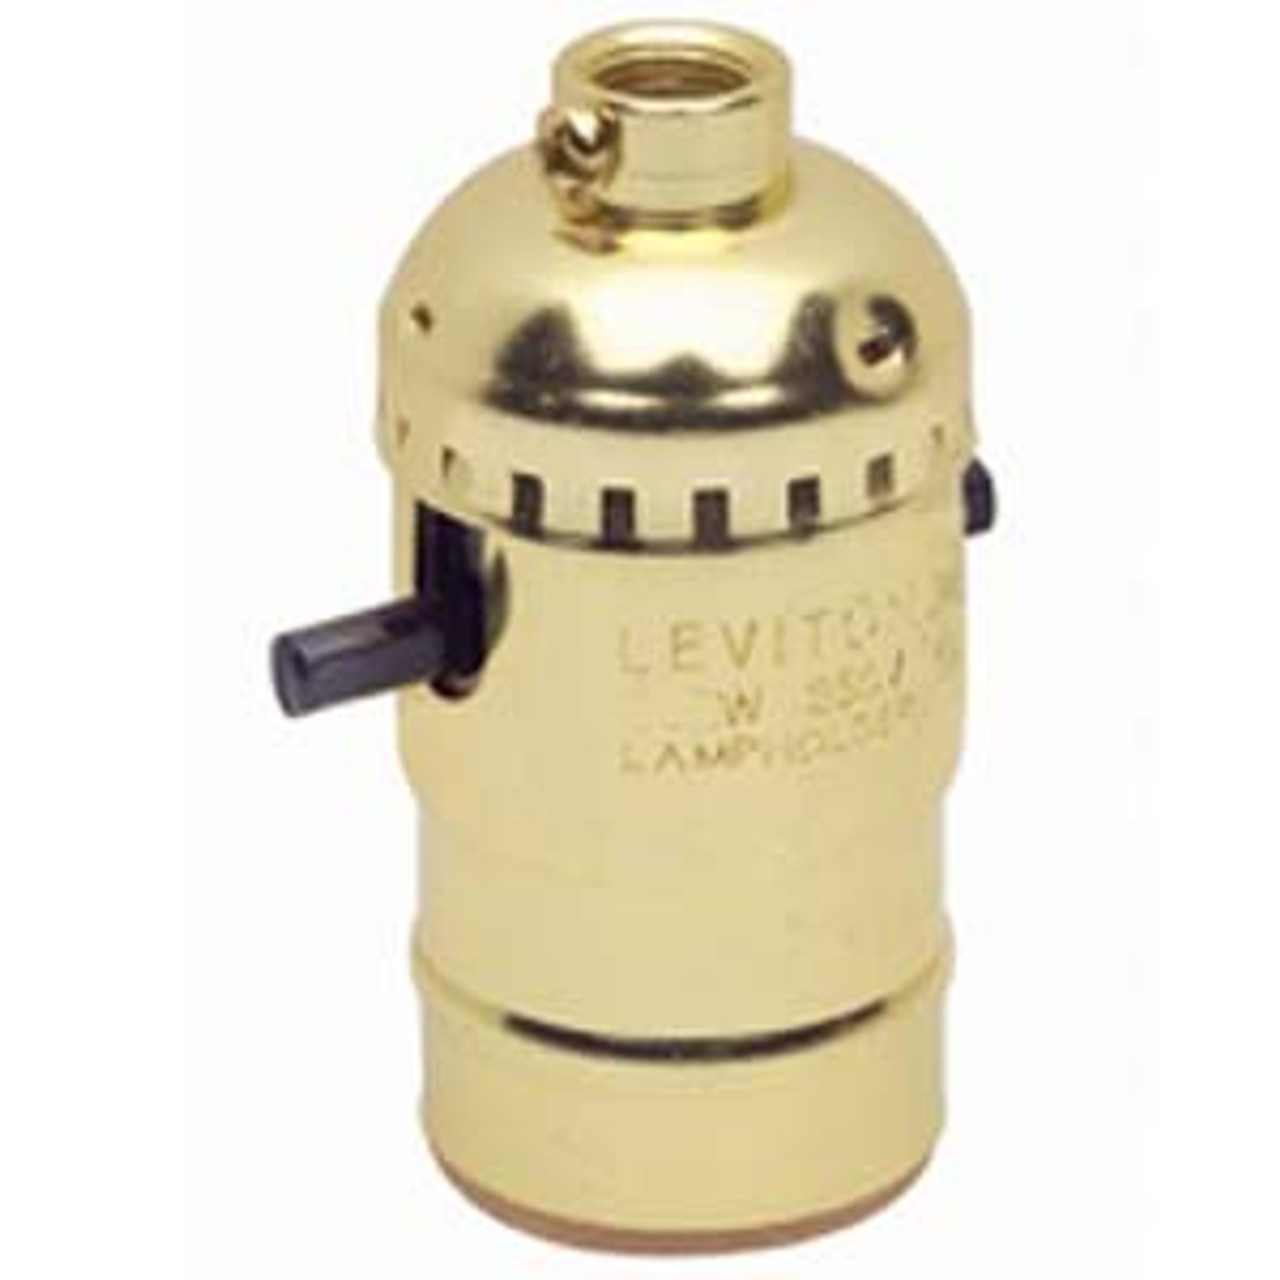 Leviton 6098-PG - Aluminum Shell, Push-Thru